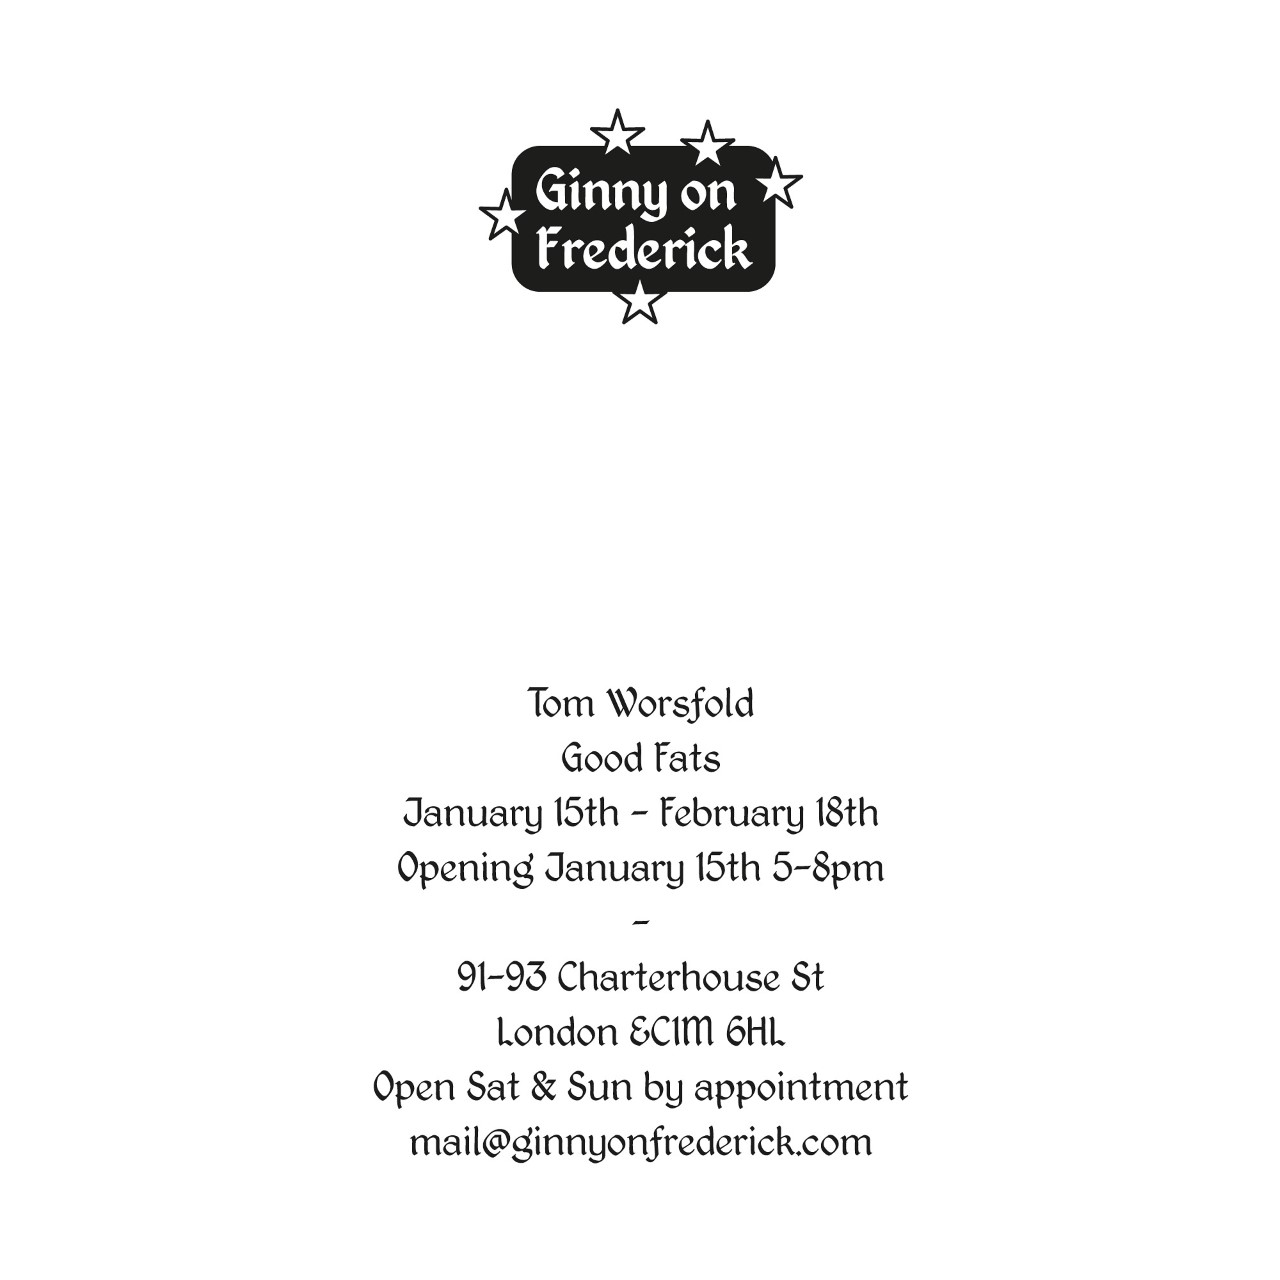 Tom Worsfold - Good Fats - Ginny on Frederick